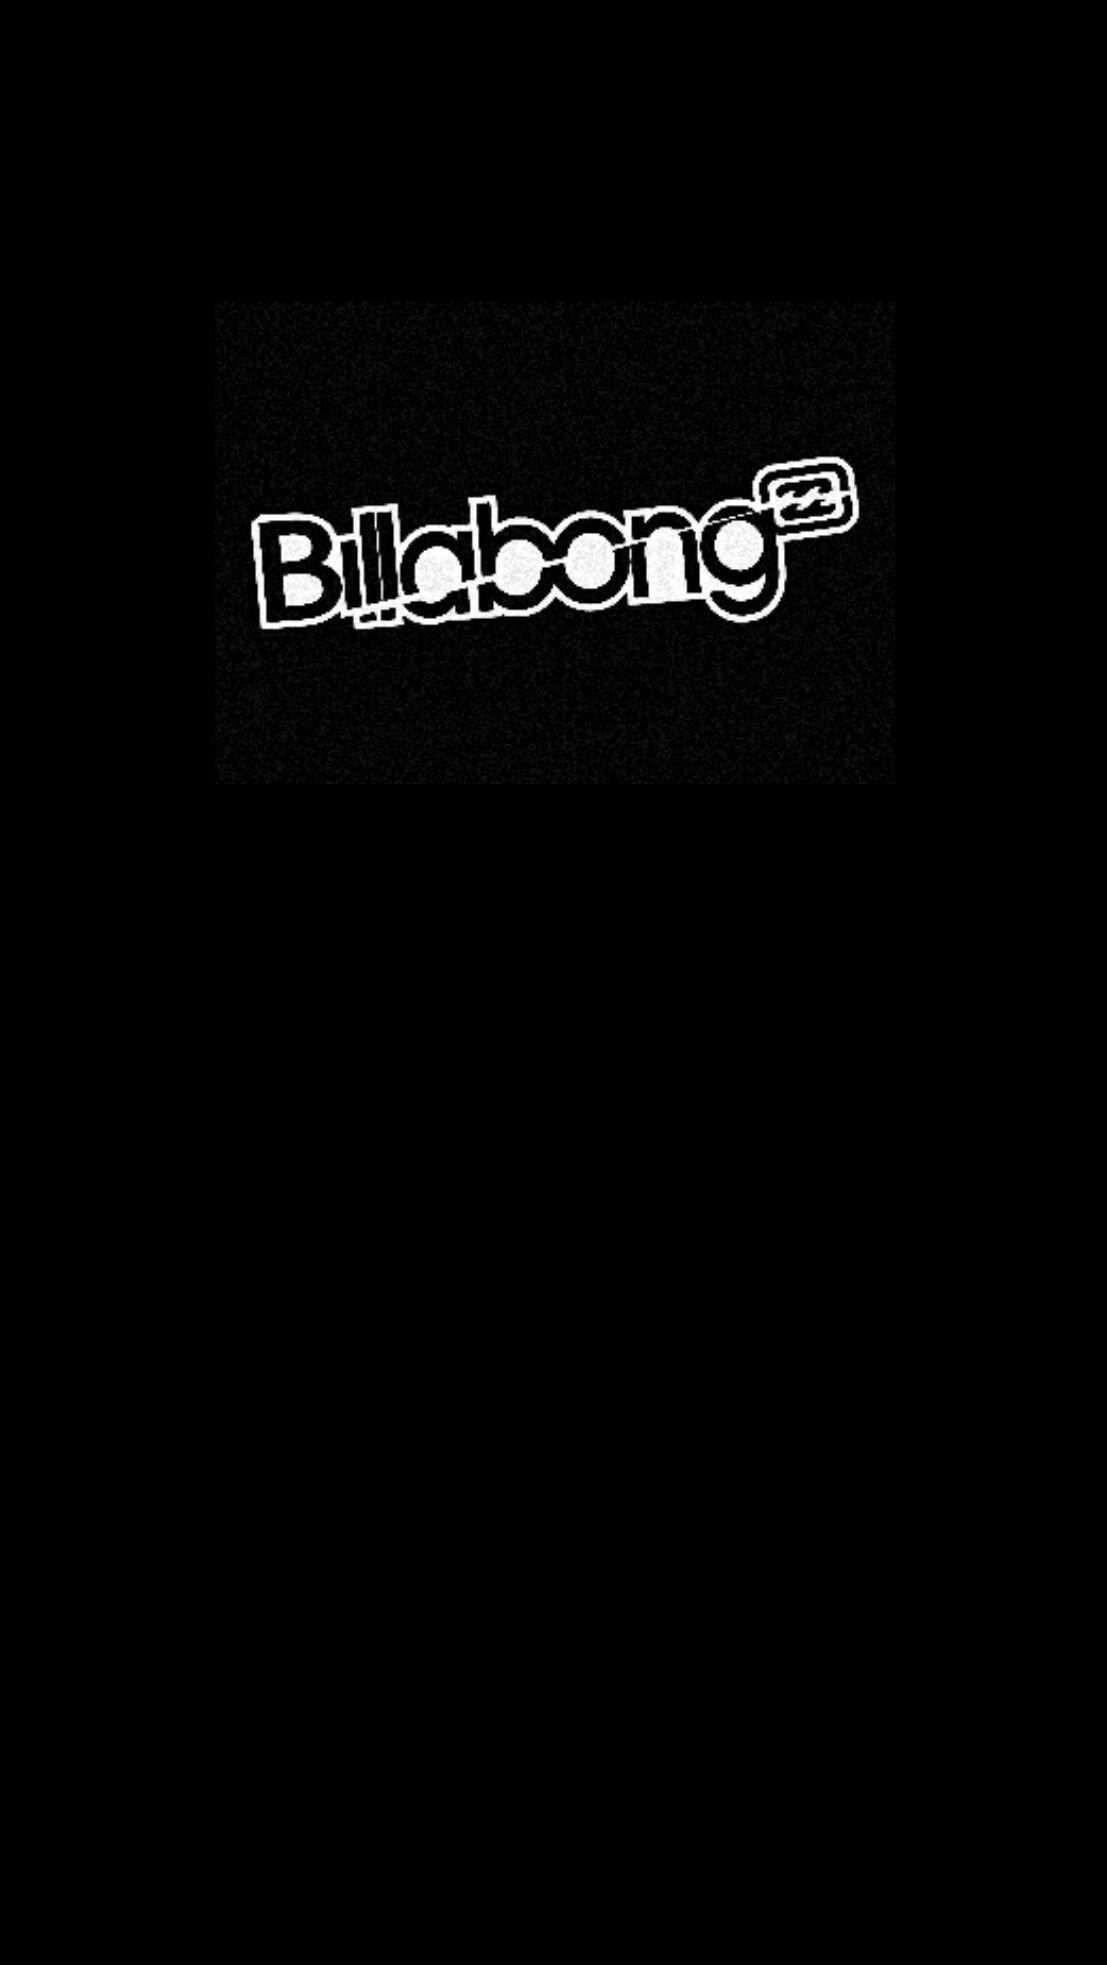 Billabong Logo Wallpapers Wallpaper Cave